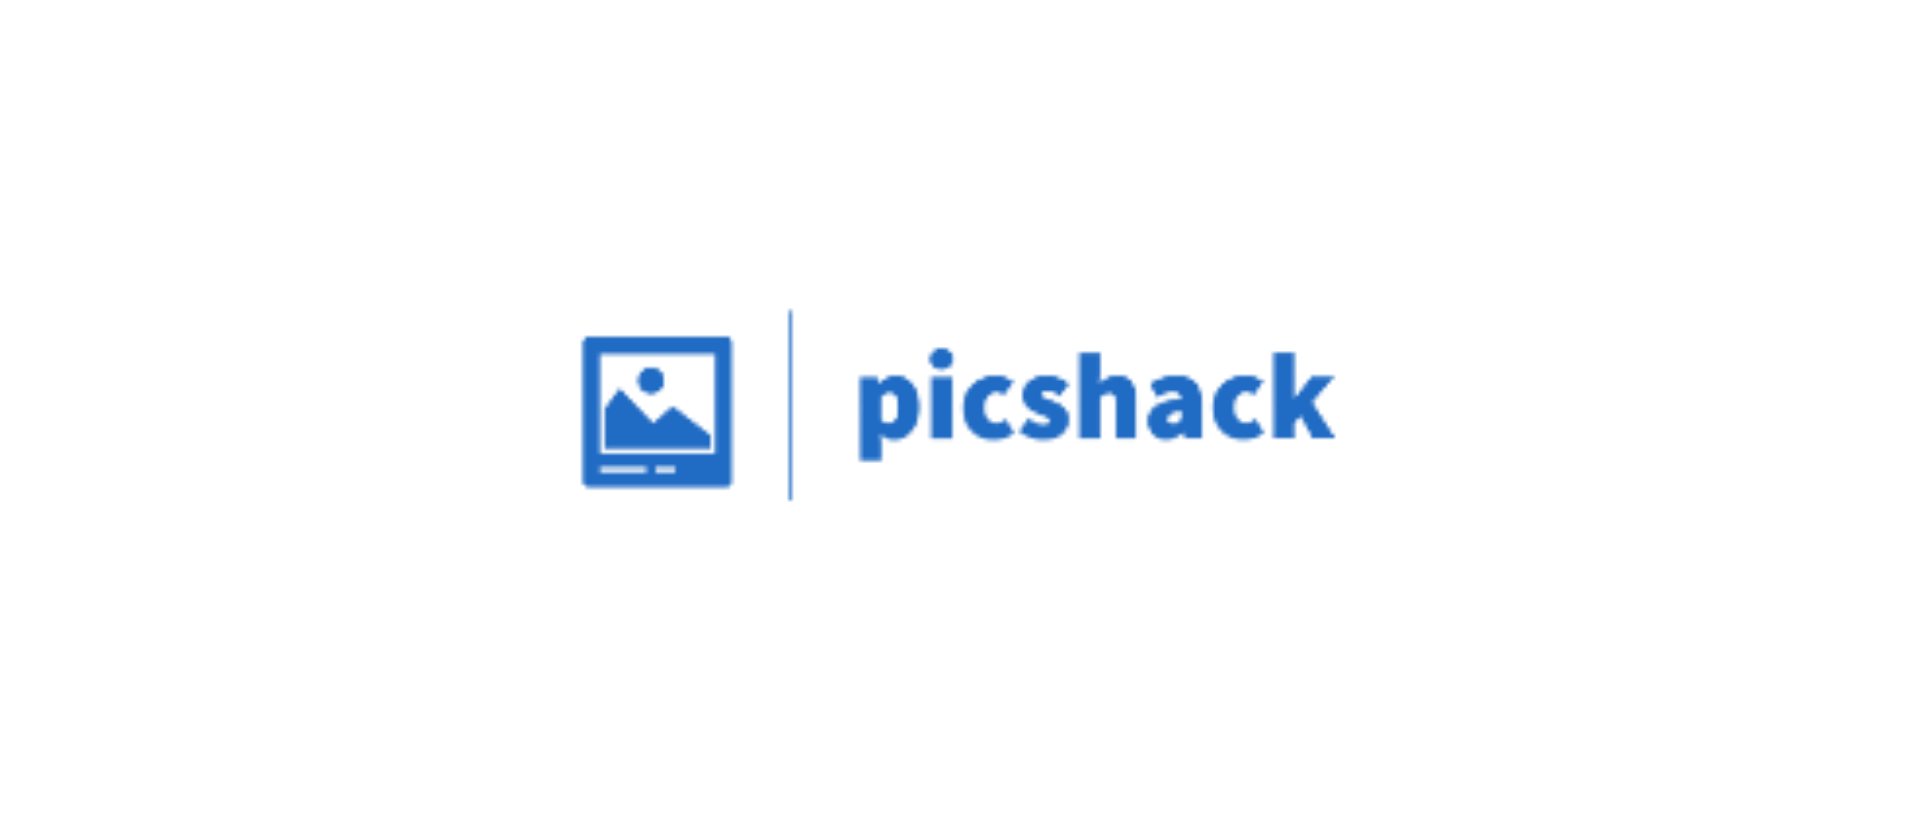 PicShack单张图片大小限制100MB 的免费图片托管服务商。-www.131417.net